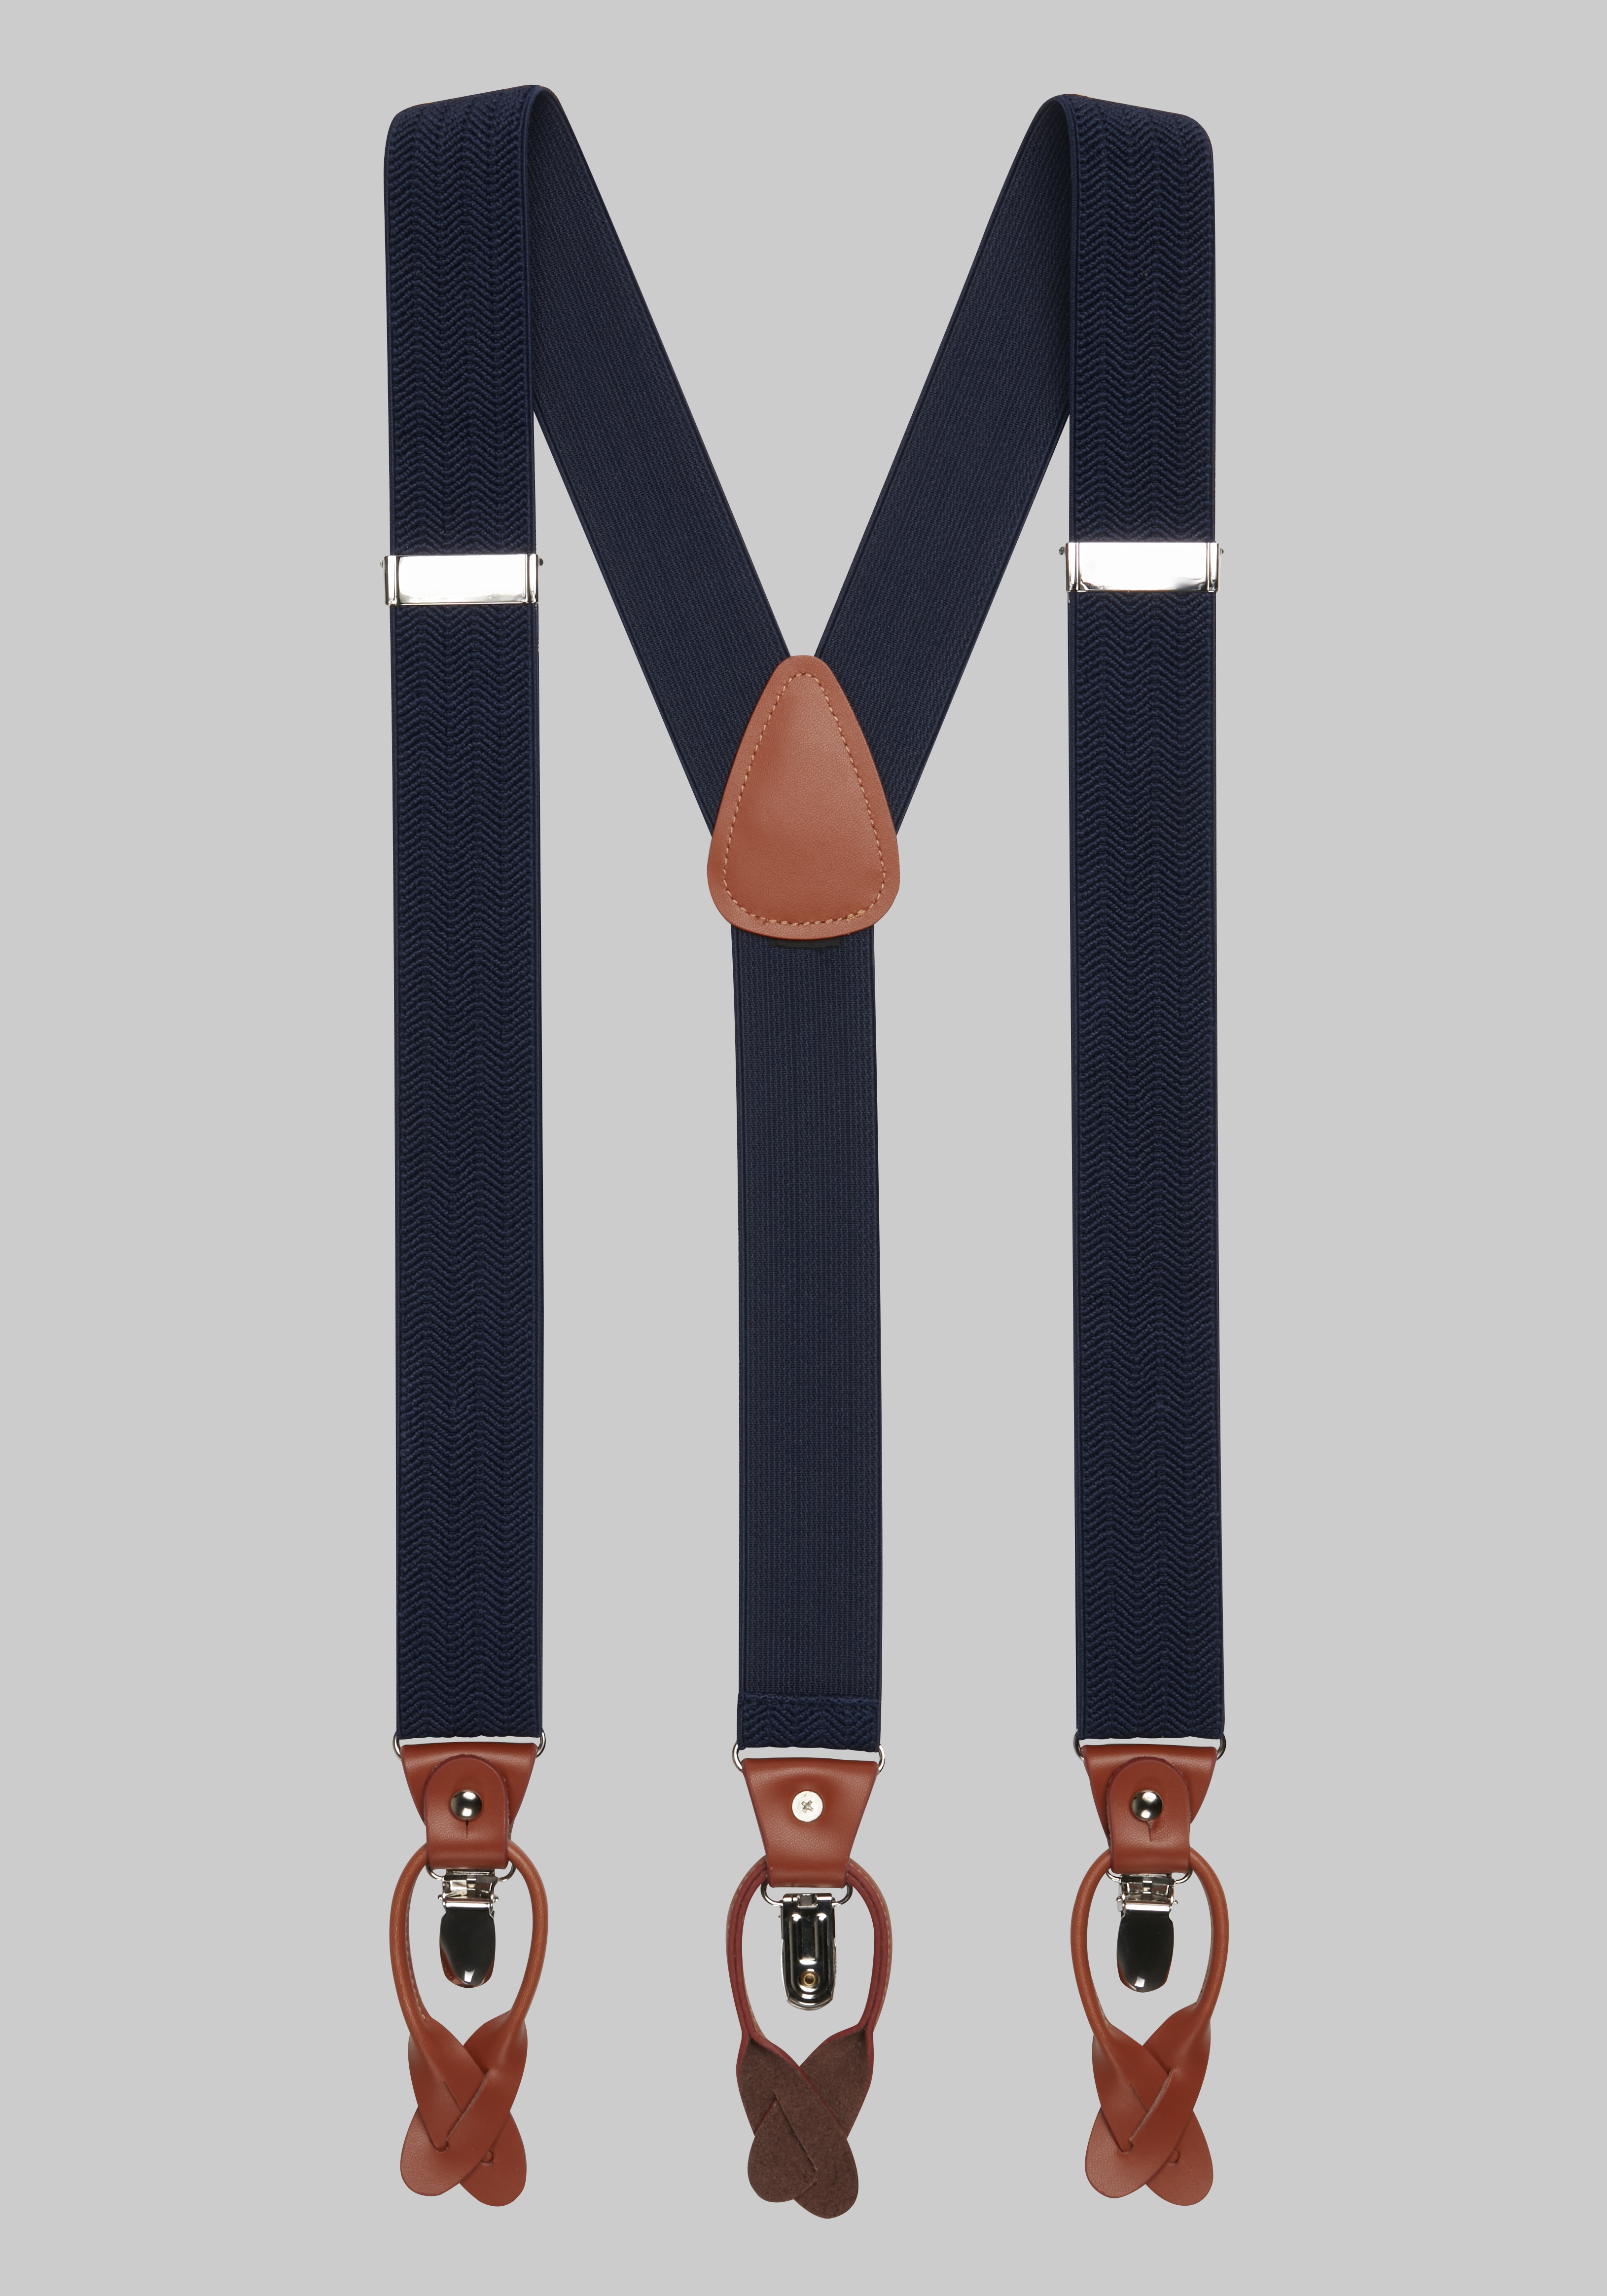 JoS. A. Bank Men's Jos. A Bank Stretch Silk Suspenders, Black, One Size